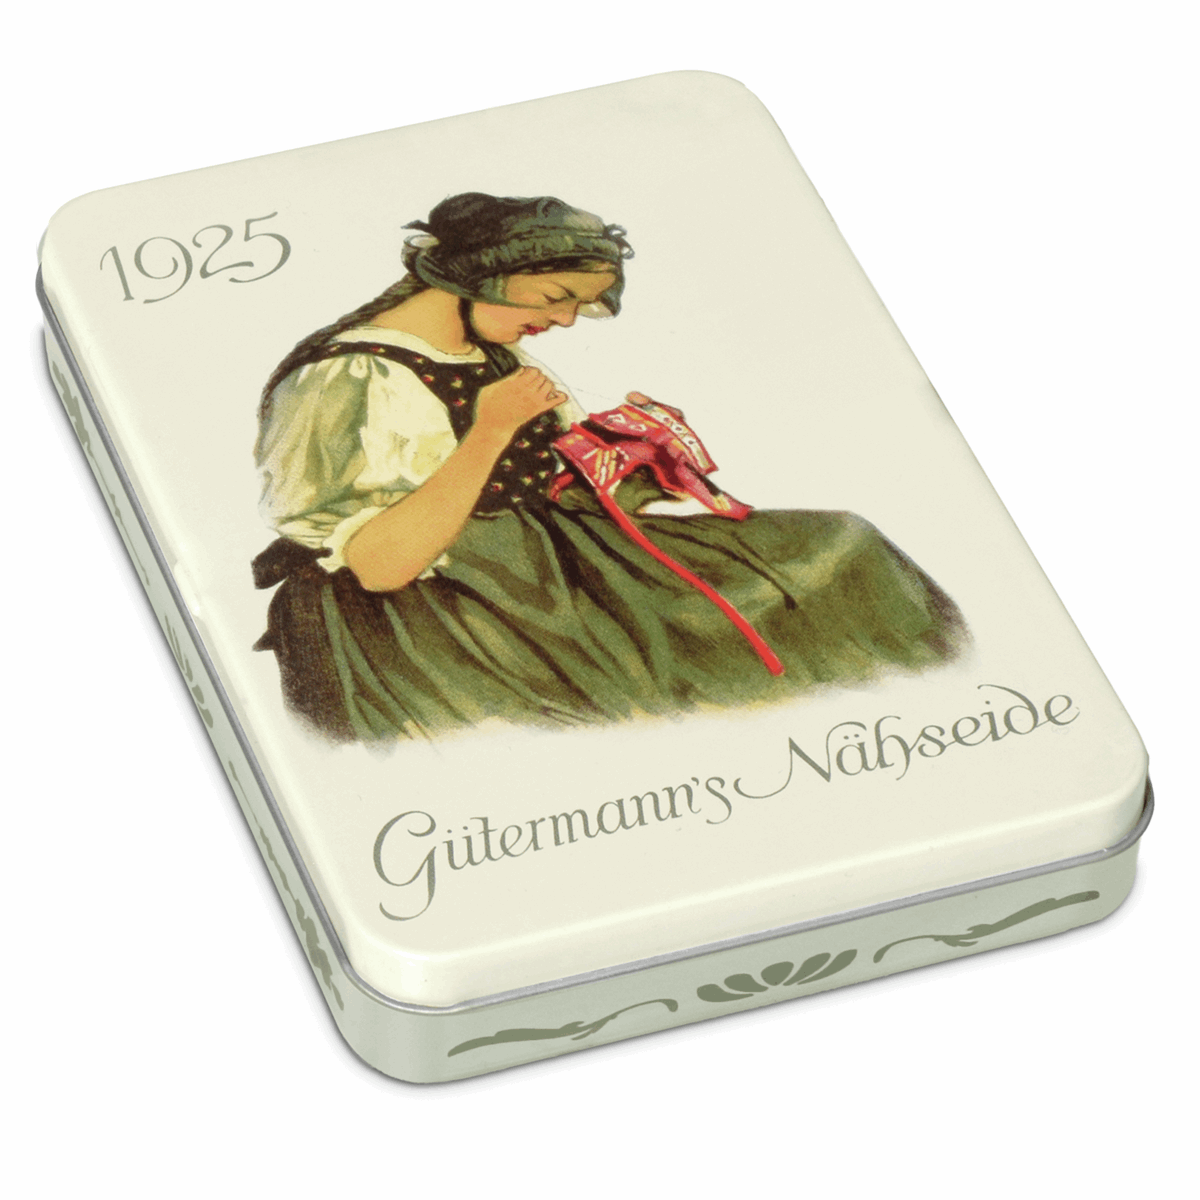 Gutermann - Nostalgic Box of Sew-All Thread - Classic